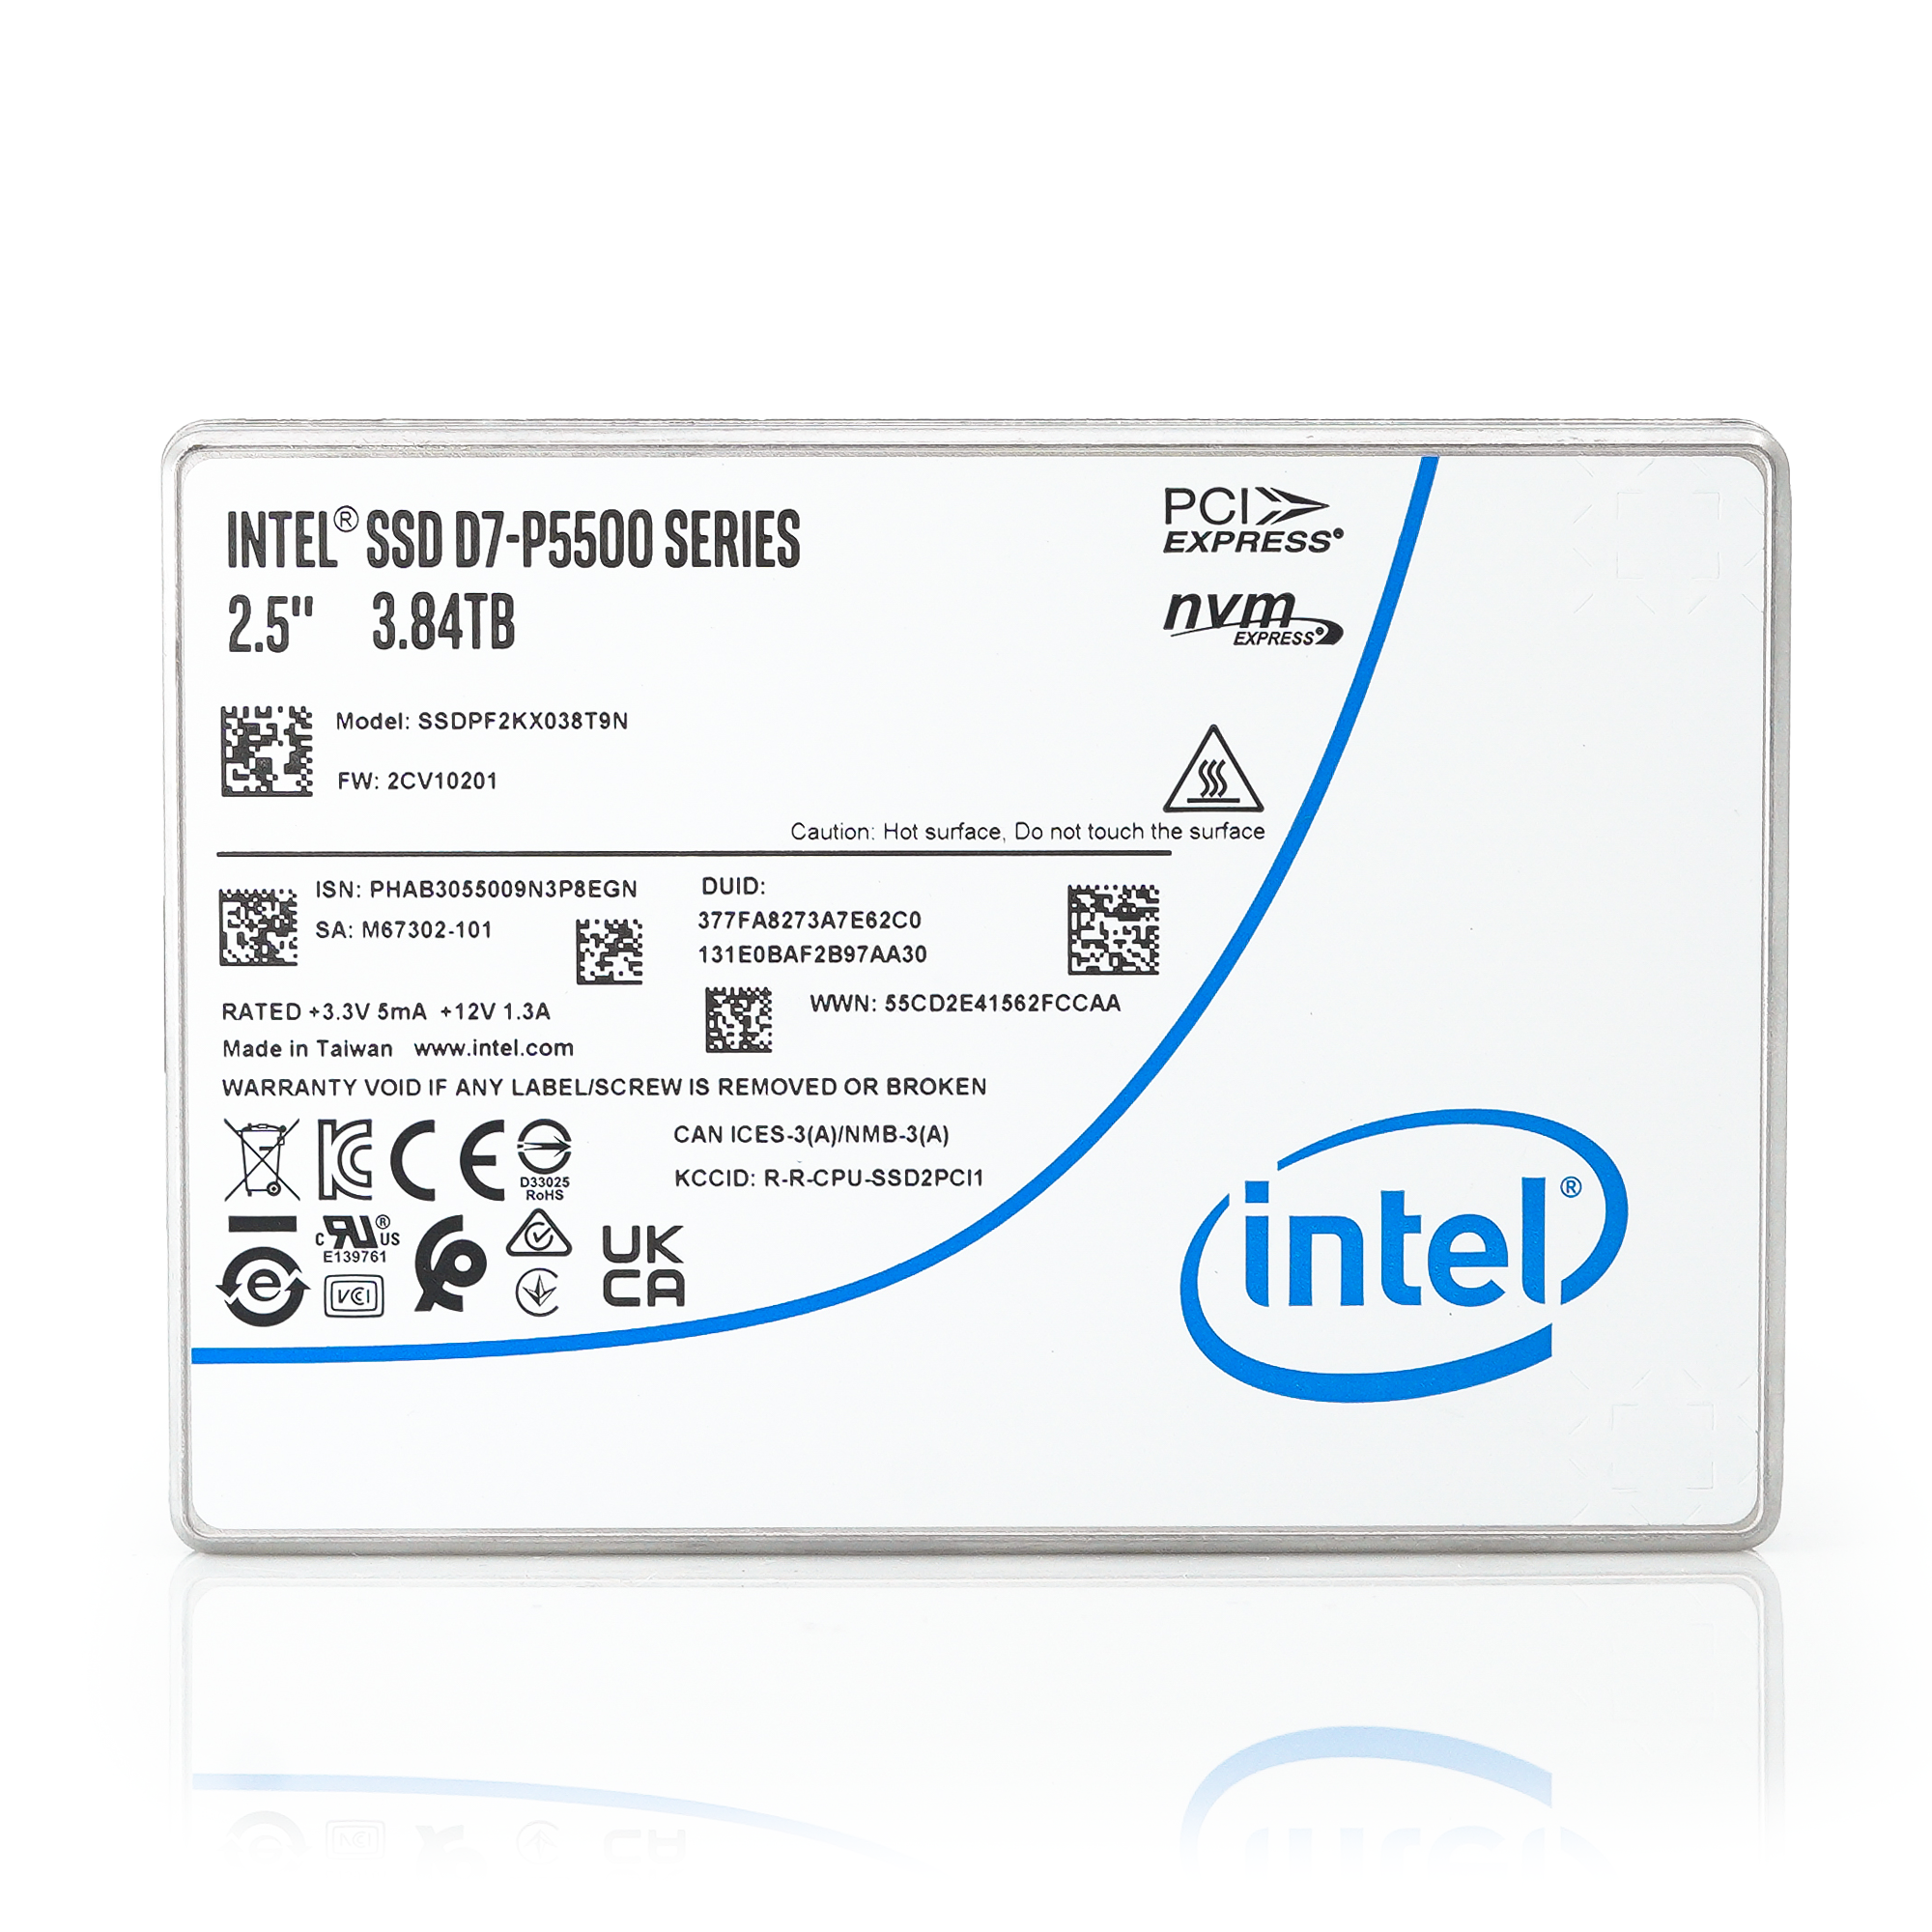 Intel P5500 3.84TB Enterprise SSD Front Facing